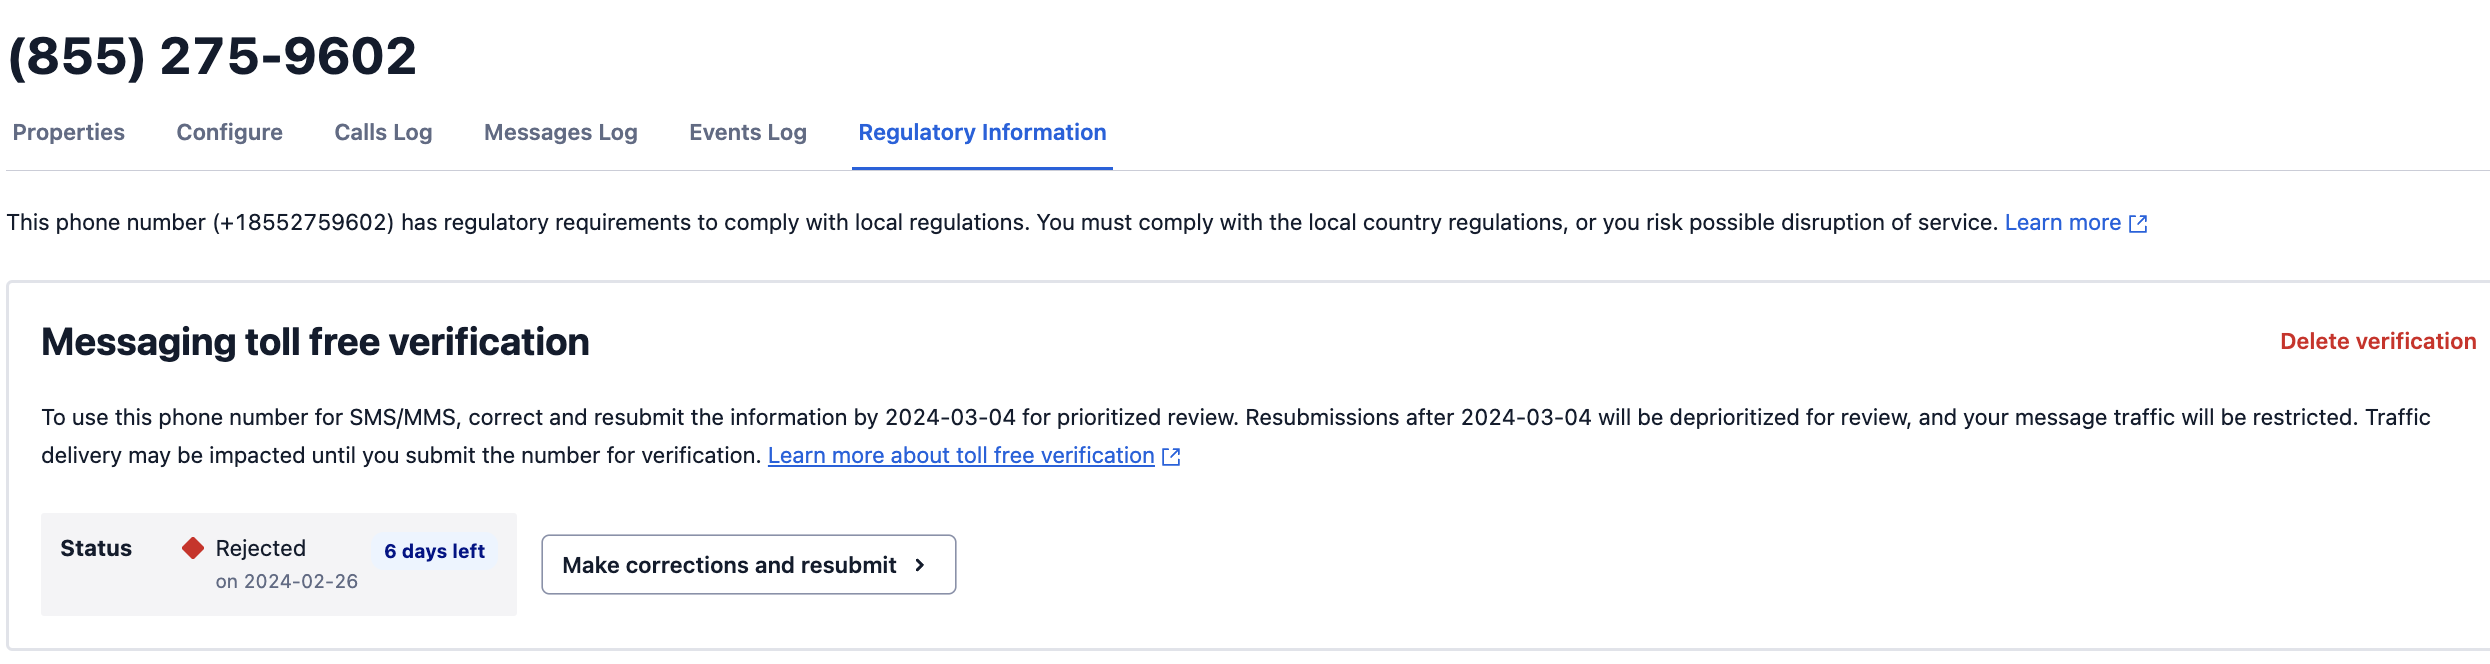 Regulatory information tab for item one.